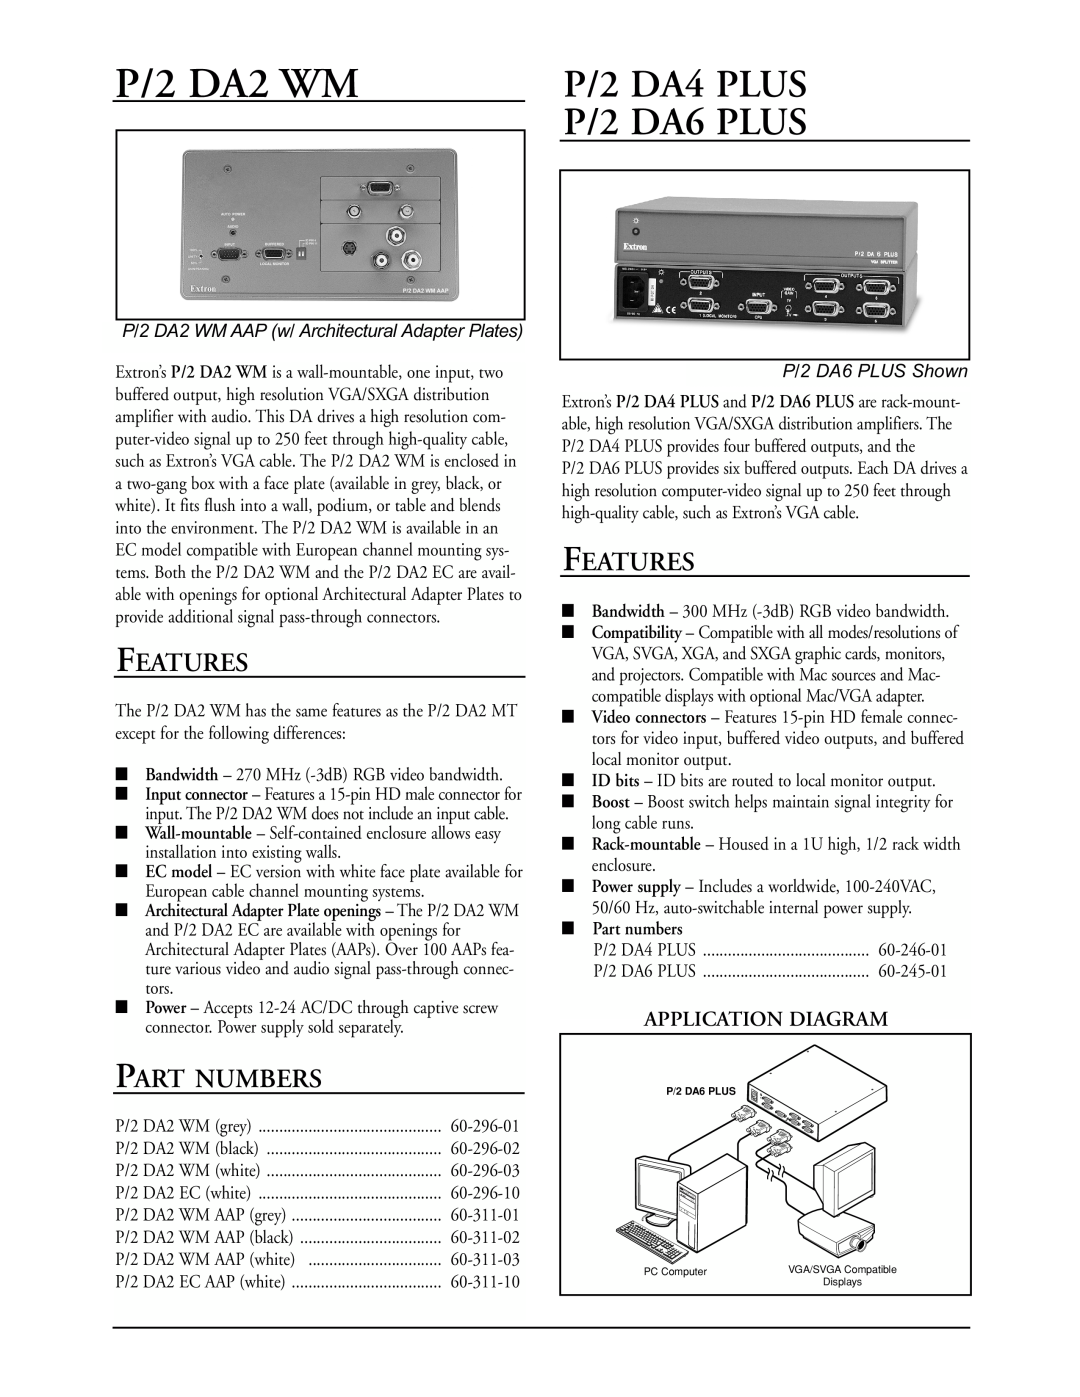 Extron electronic MAC manual P/2 DA4 PLUS P/2 DA6 PLUS, Part Numbers, P/2 DA2 WM AAP w/ Architectural Adapter Plates 